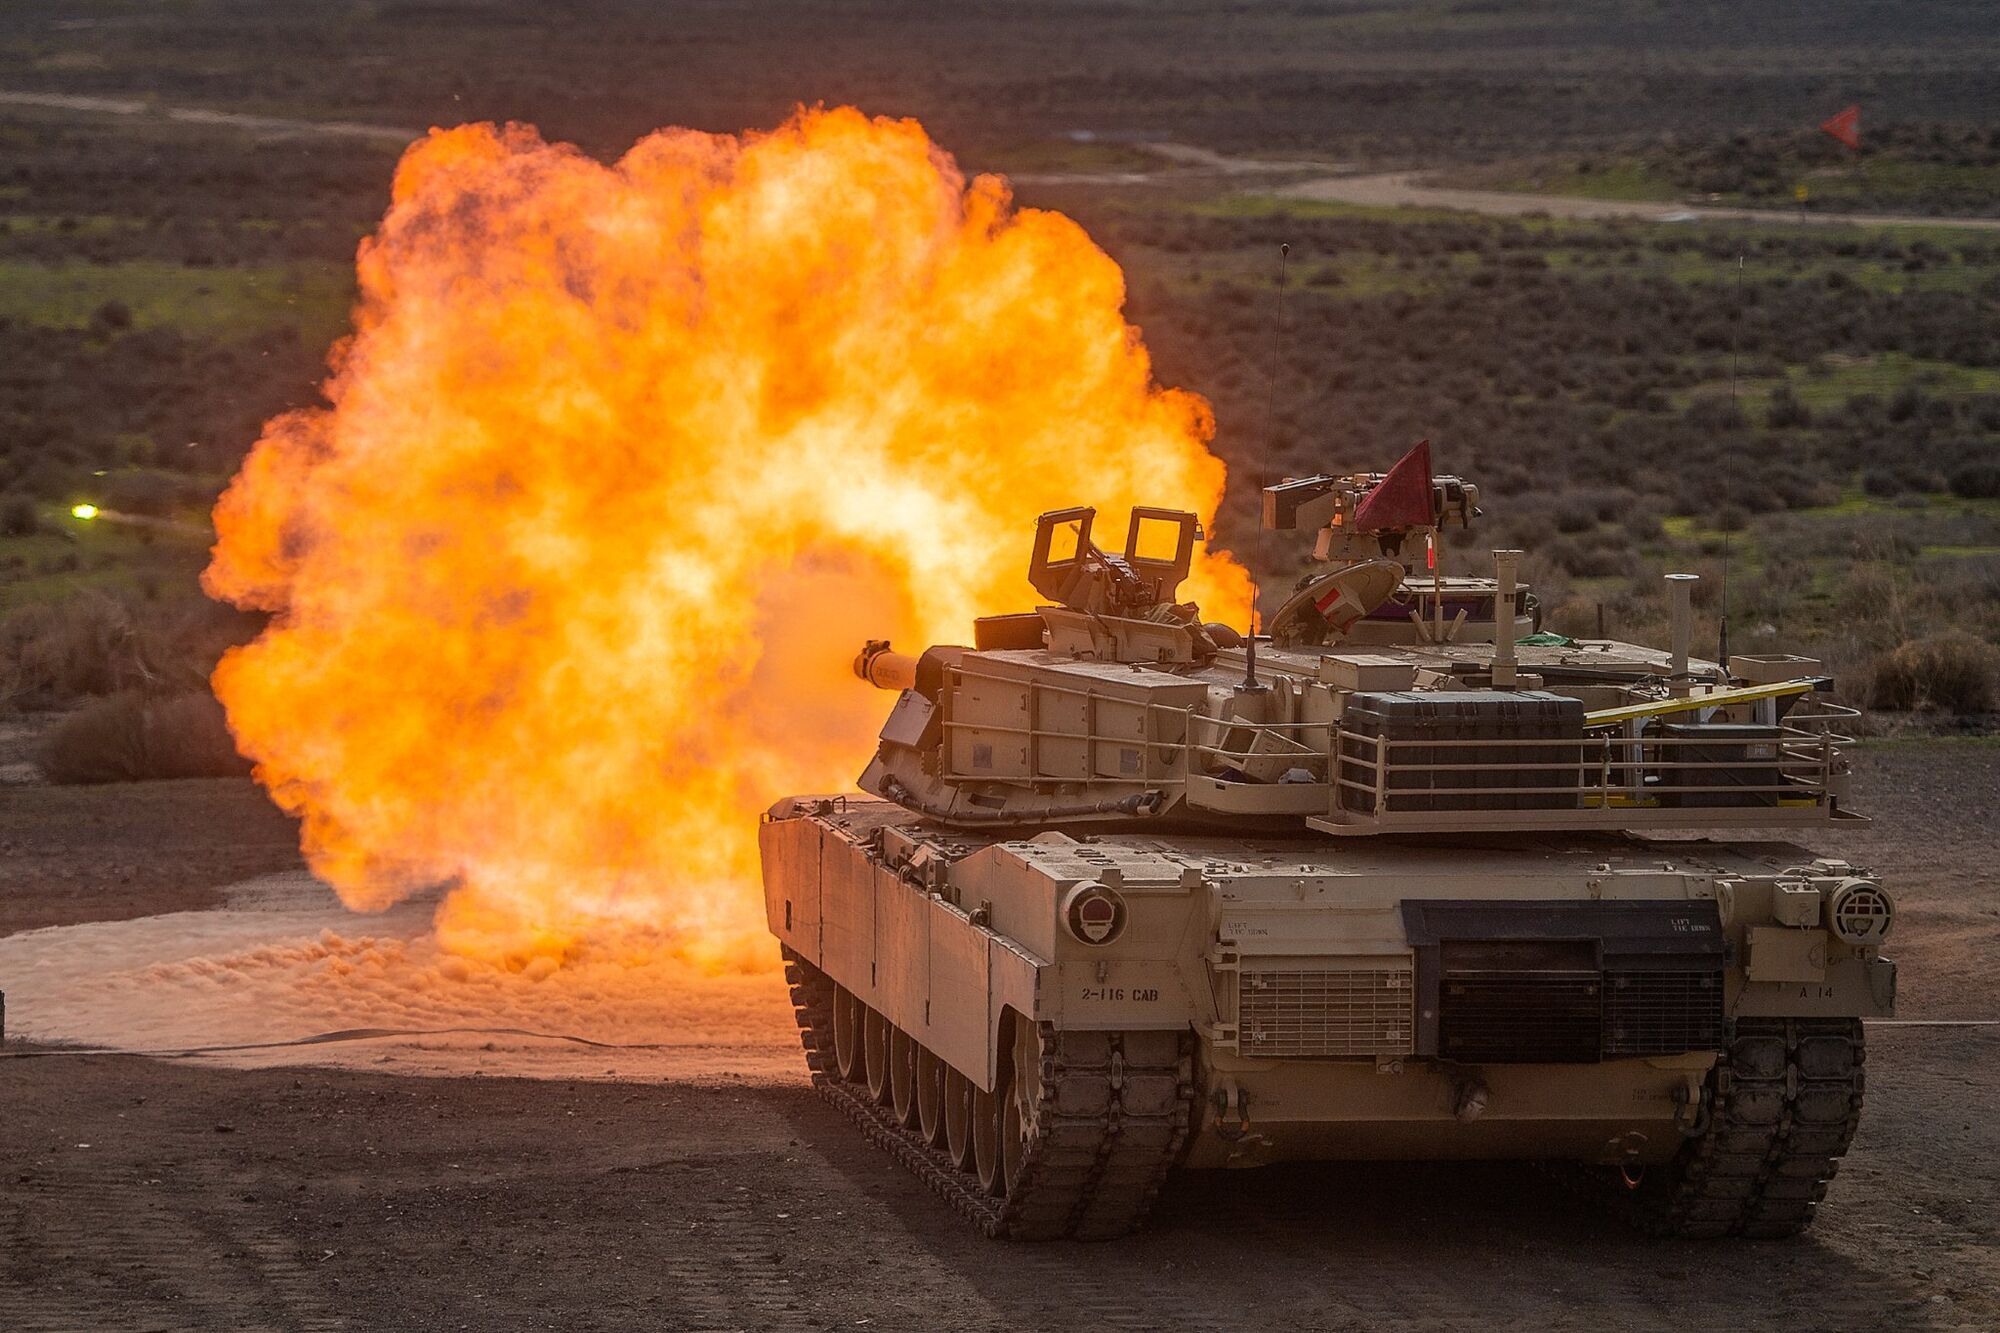 Abrams fires